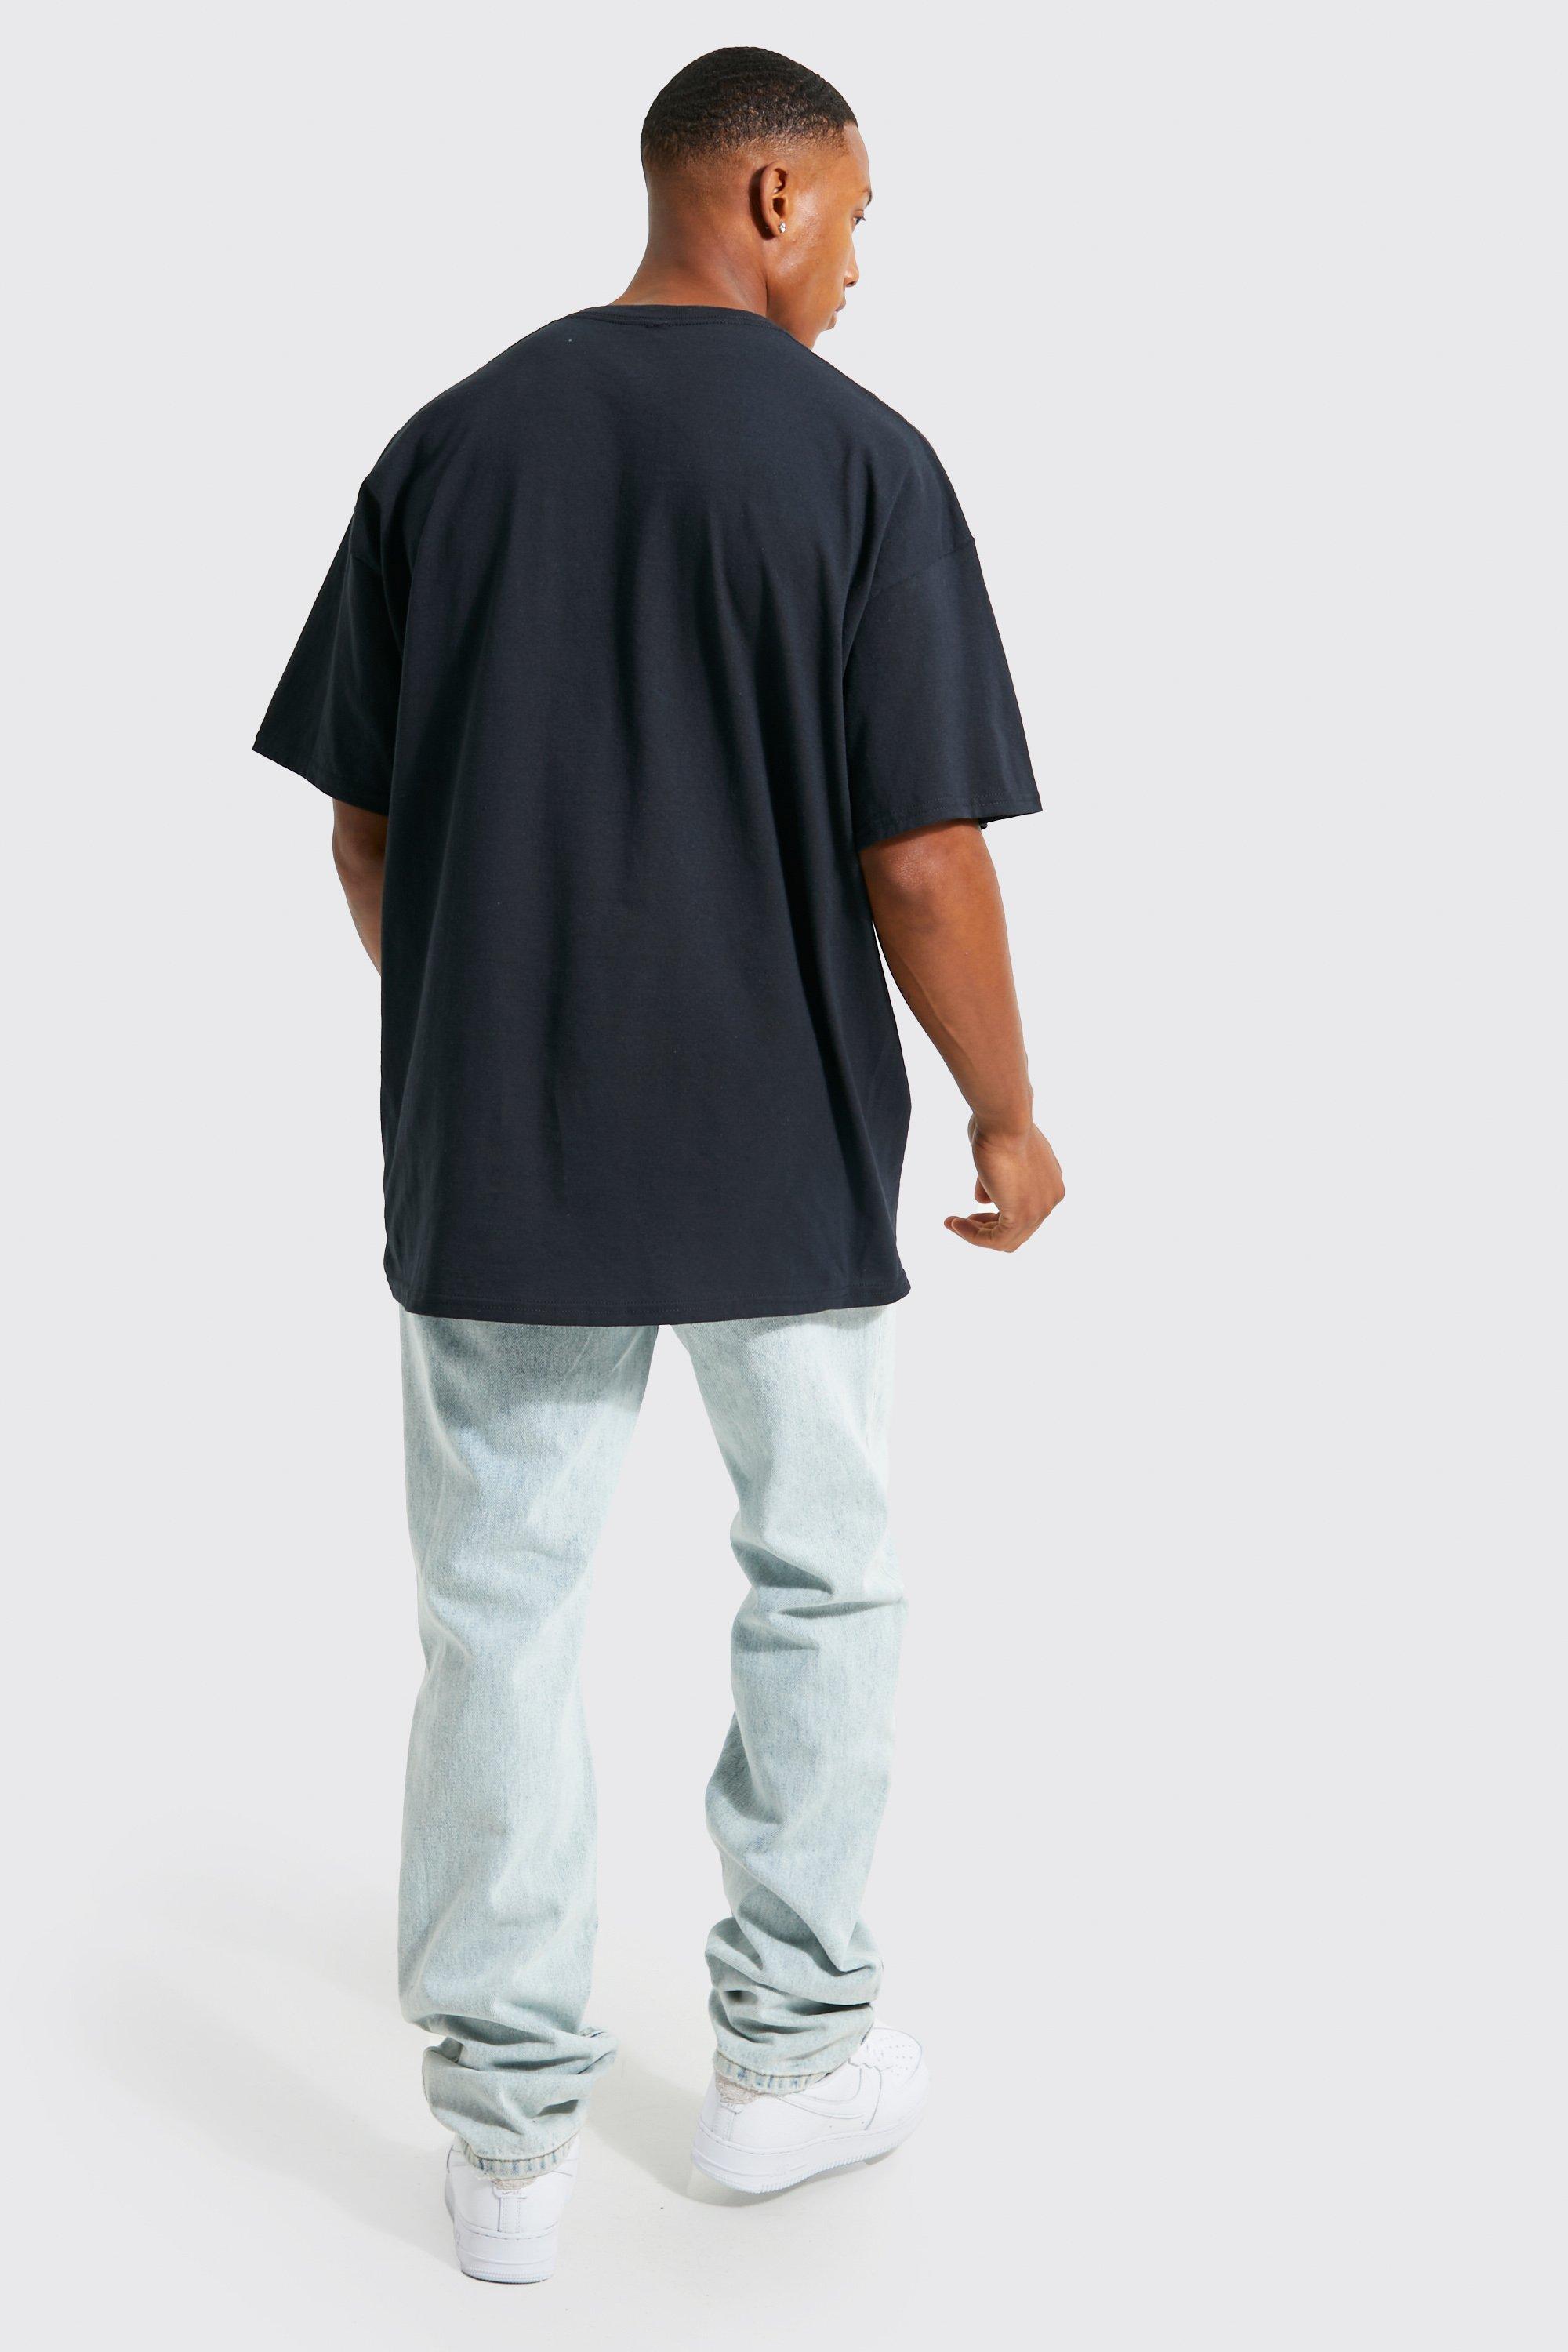 Plus Vintage Ice Cube Homage License T-shirt